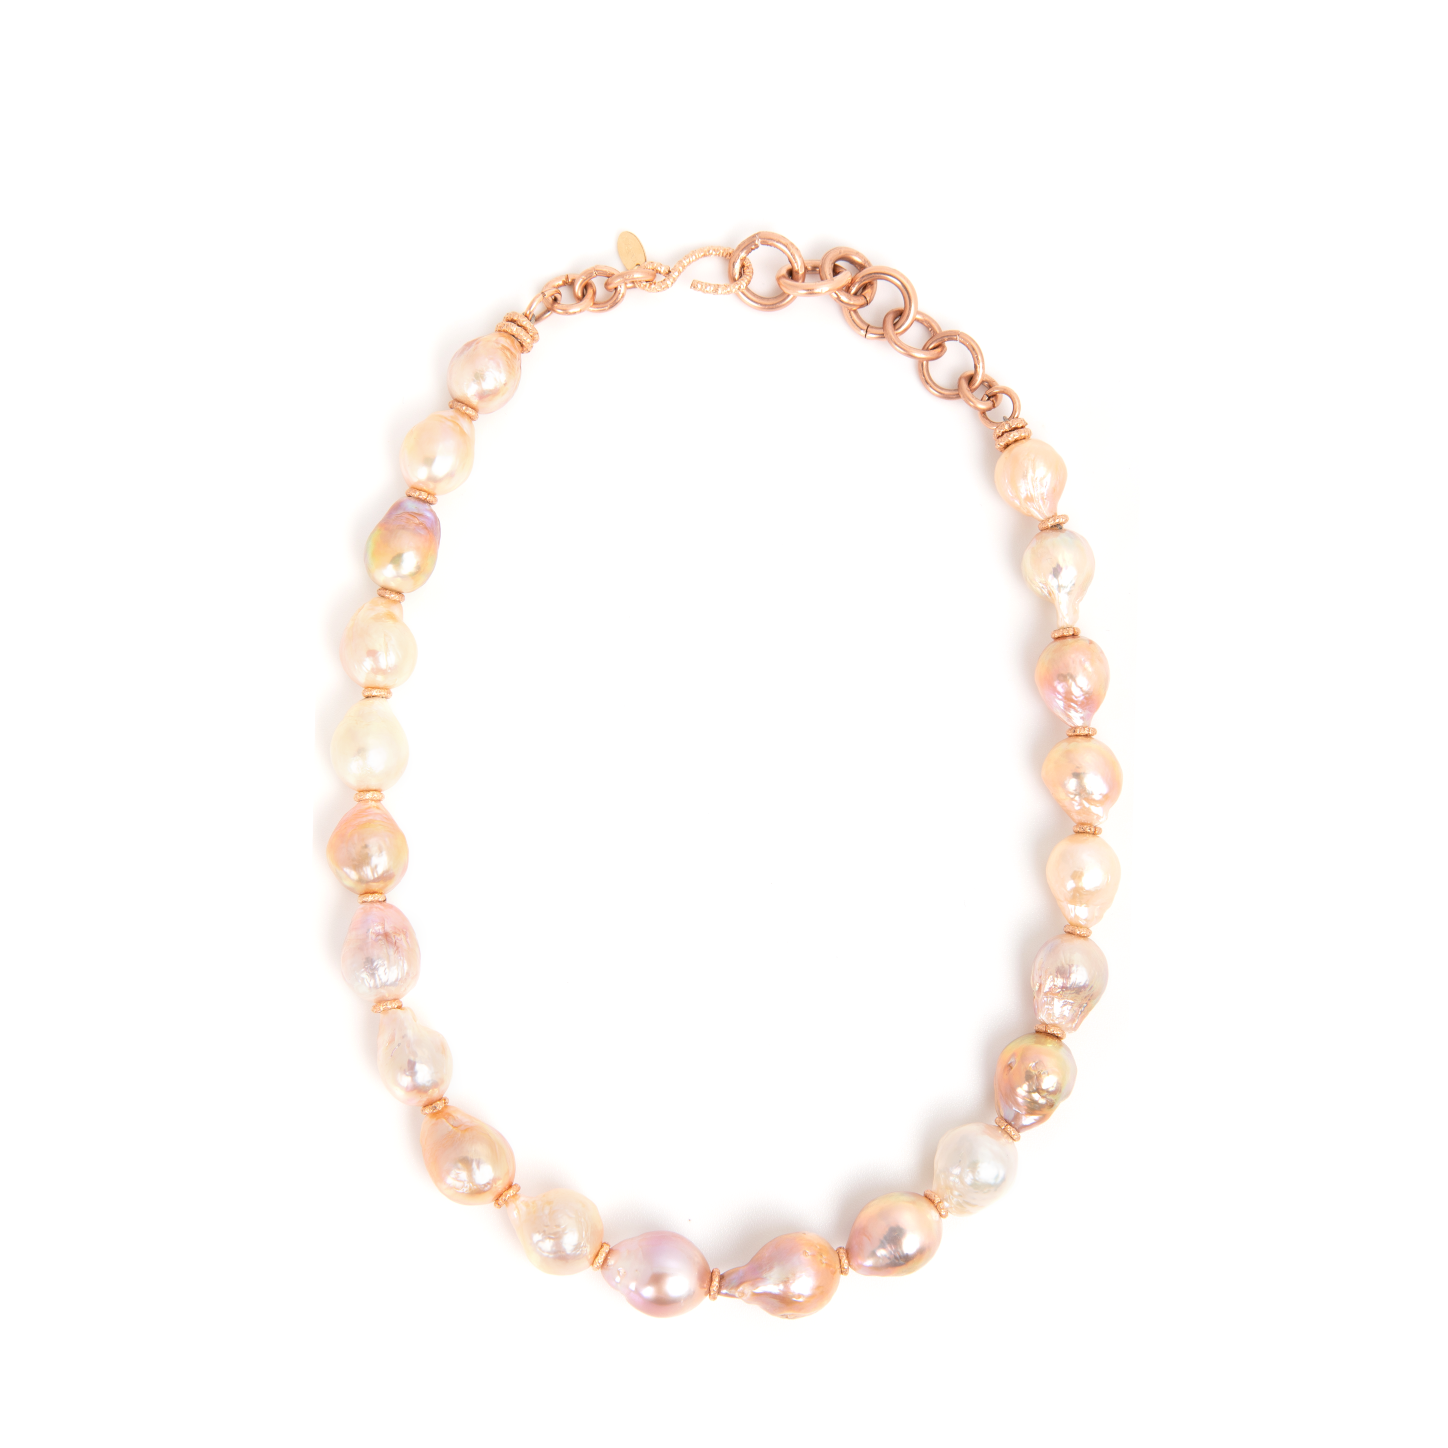 Barroca Necklace #1 (45cm) - Salmon Pearl Necklaces TARBAY   